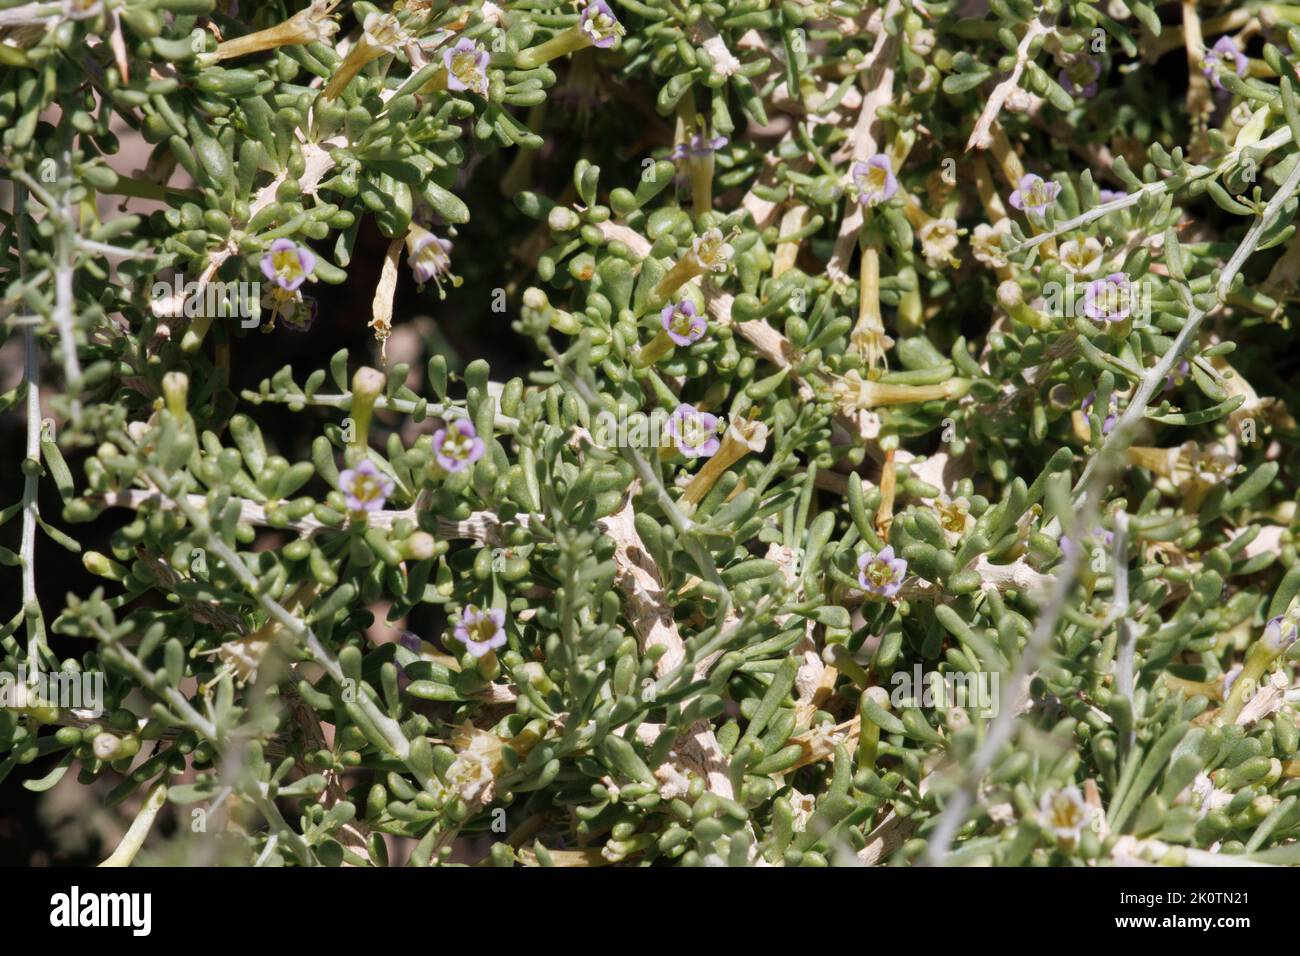 White flowering cymose cluster inflorescences of Lycium Andersonii, Solanaceae, native shrub in the Little San Bernardino Mountains, Springtime. Stock Photo